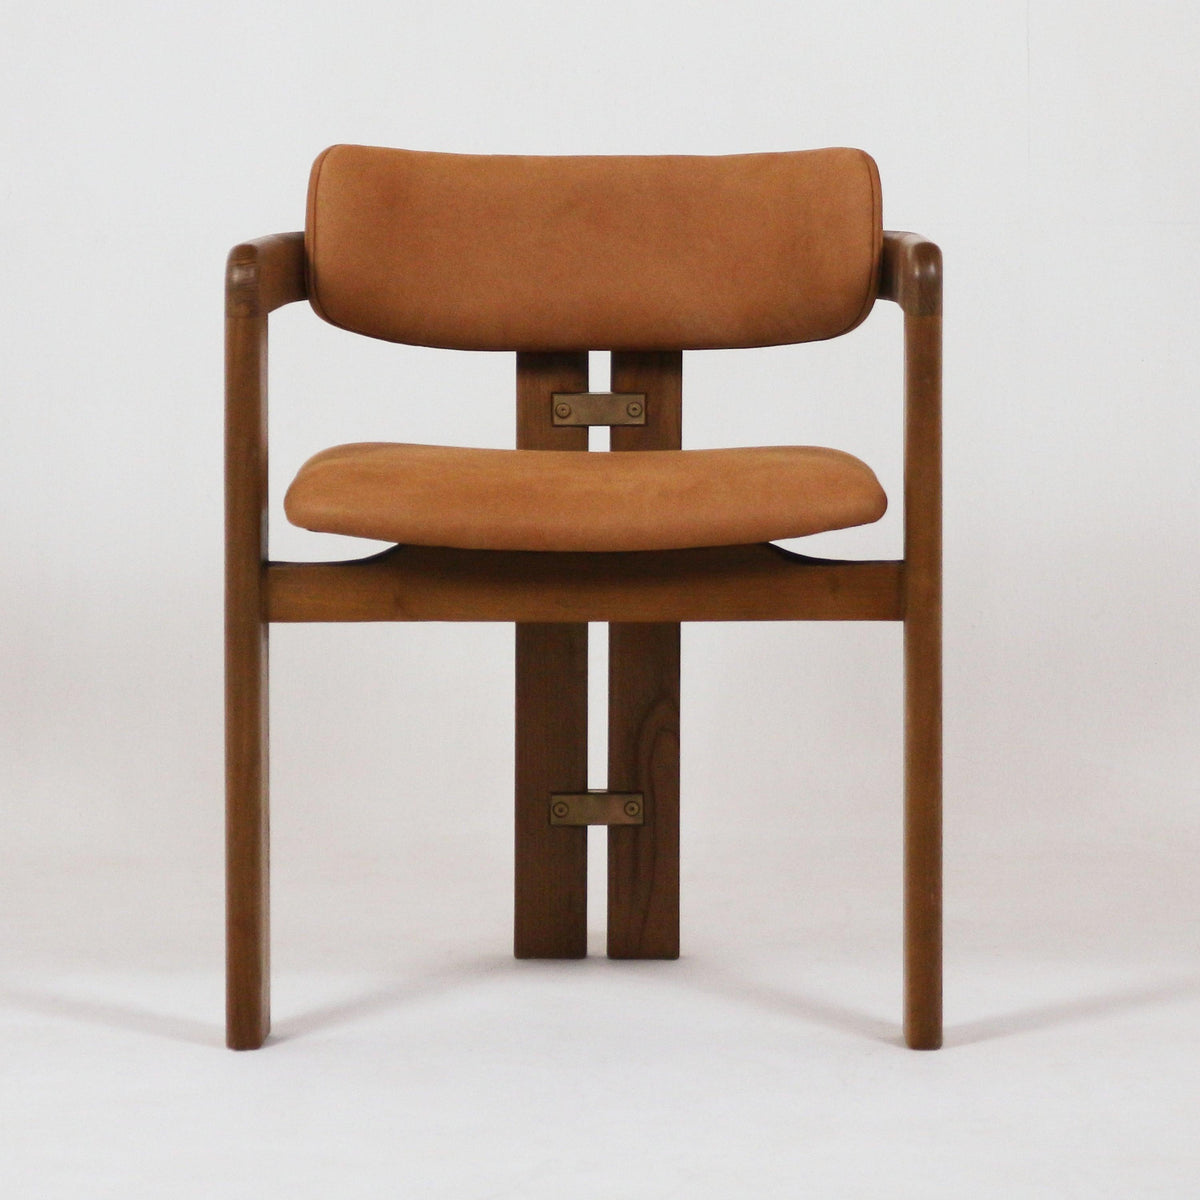 Pamplona Teak Dining Chair with Nubuck Leather - INTERIORTONIC